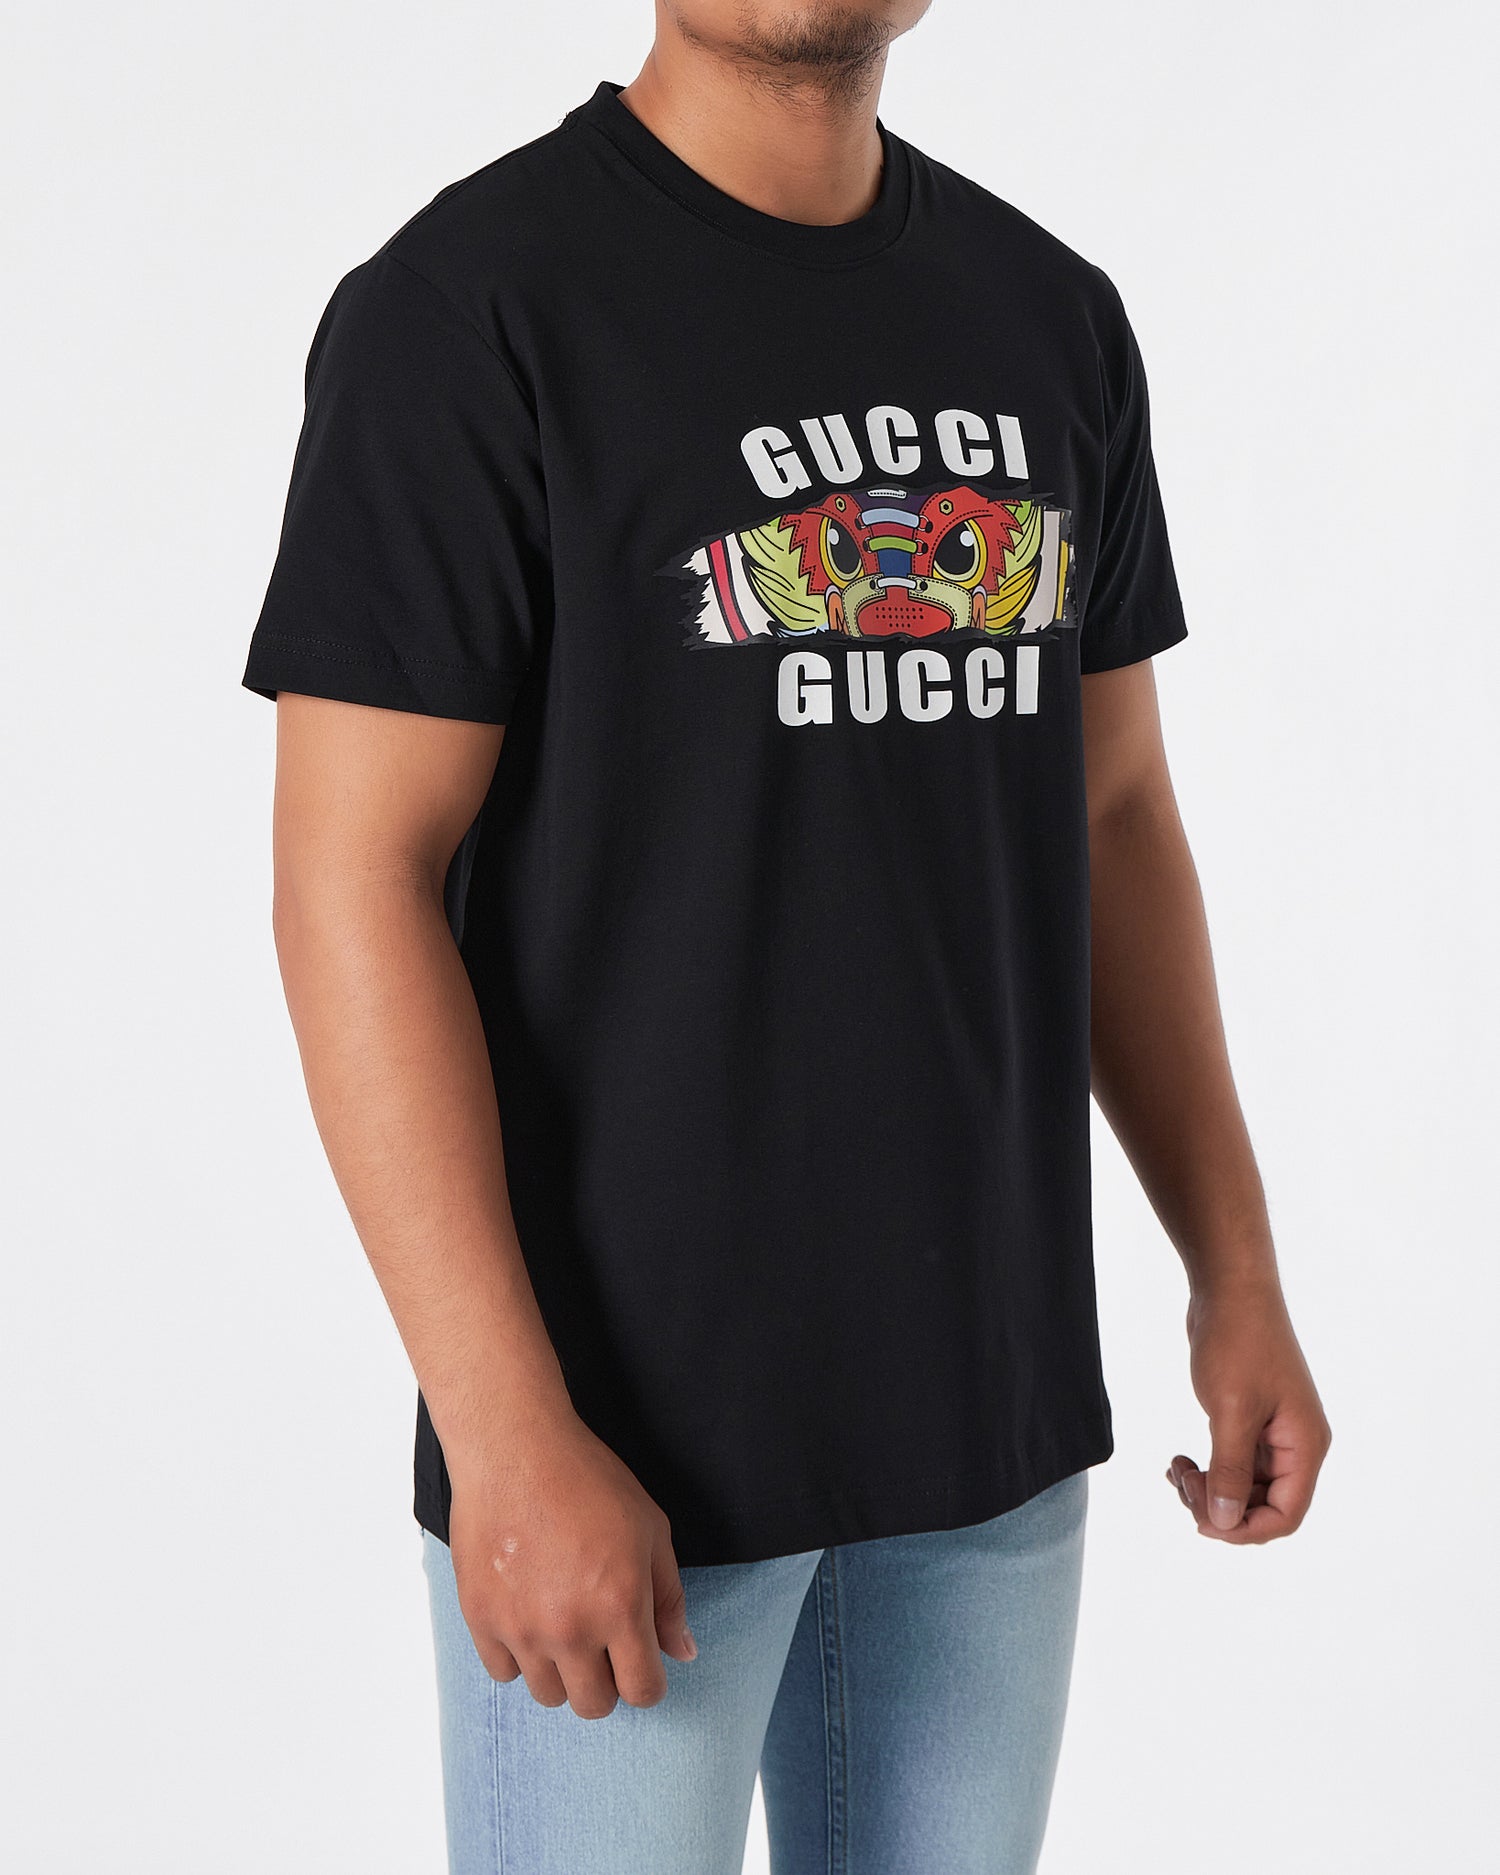 GUC Dragon Printed Men Black T-Shirt 16.90